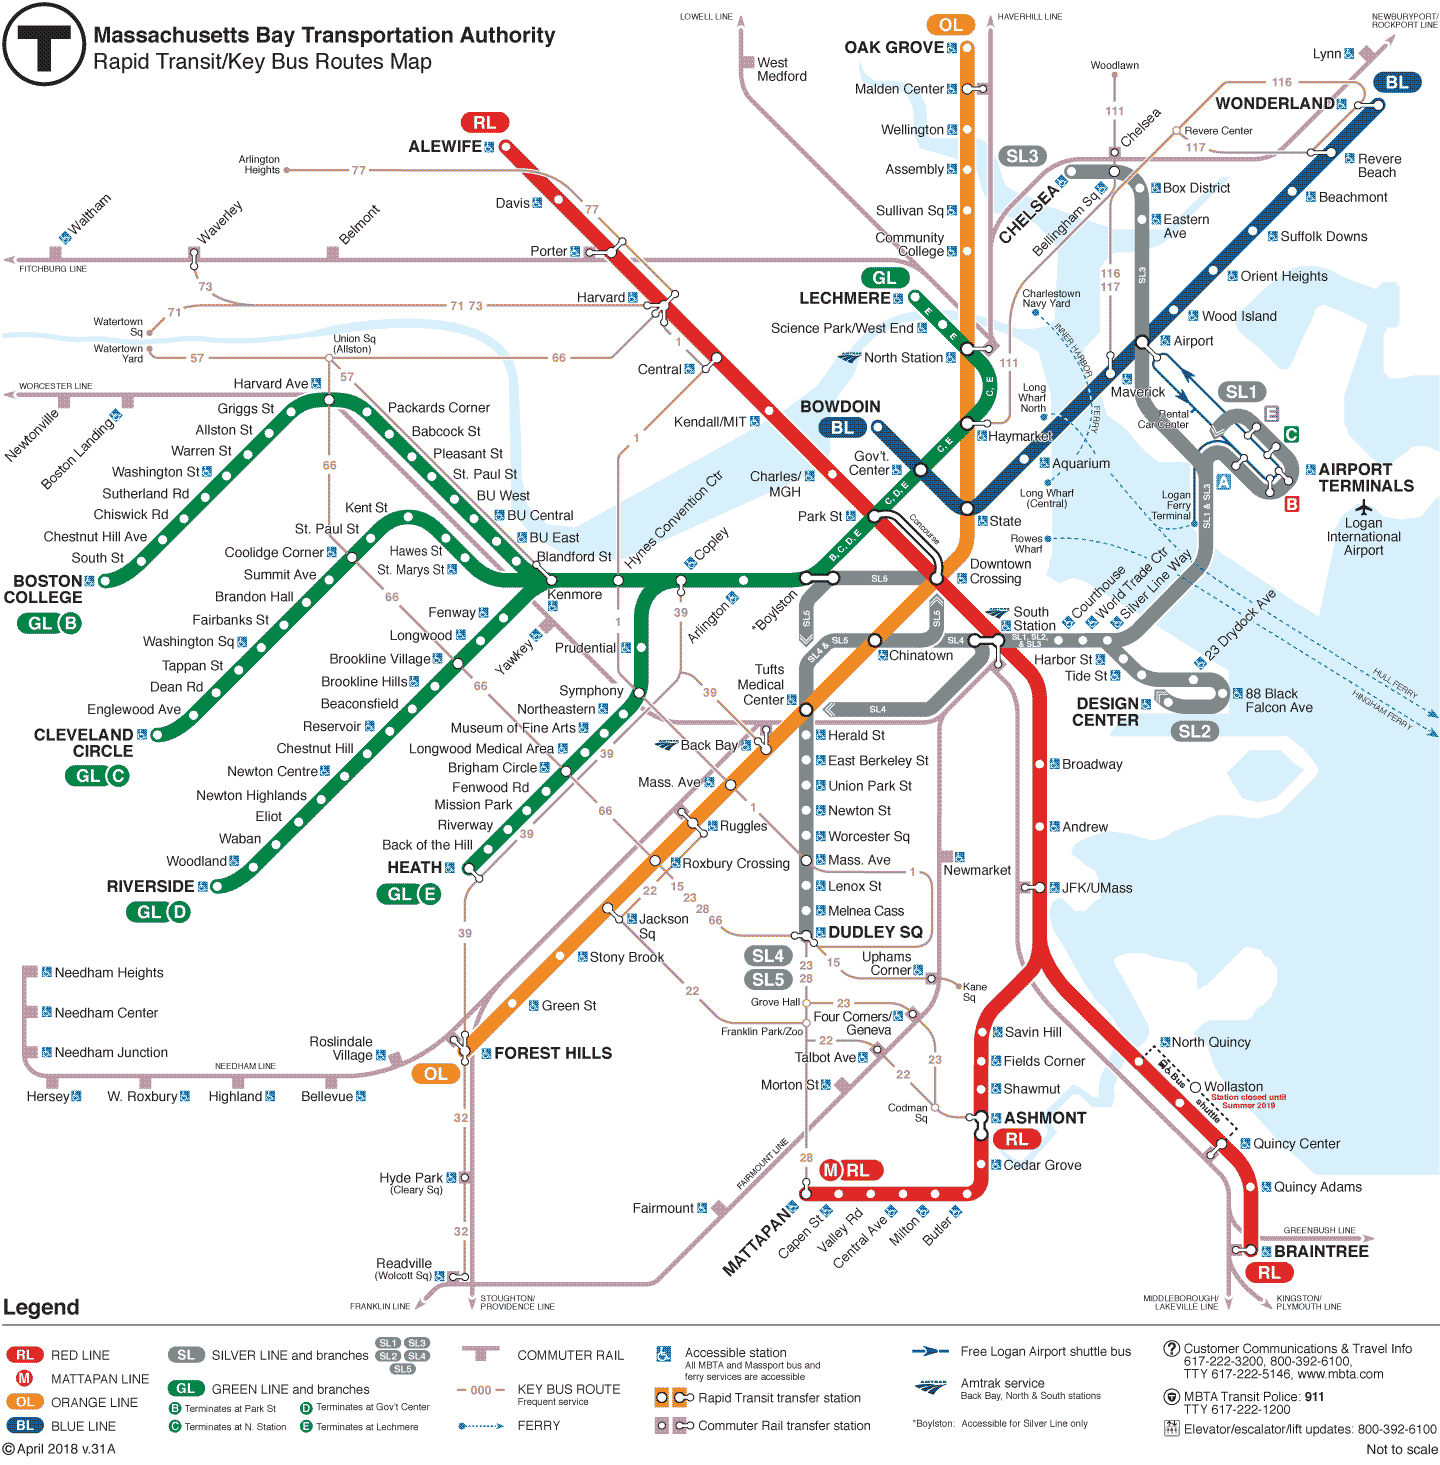 mbta简称为"t",在波士顿坐地铁也可以叫"坐t